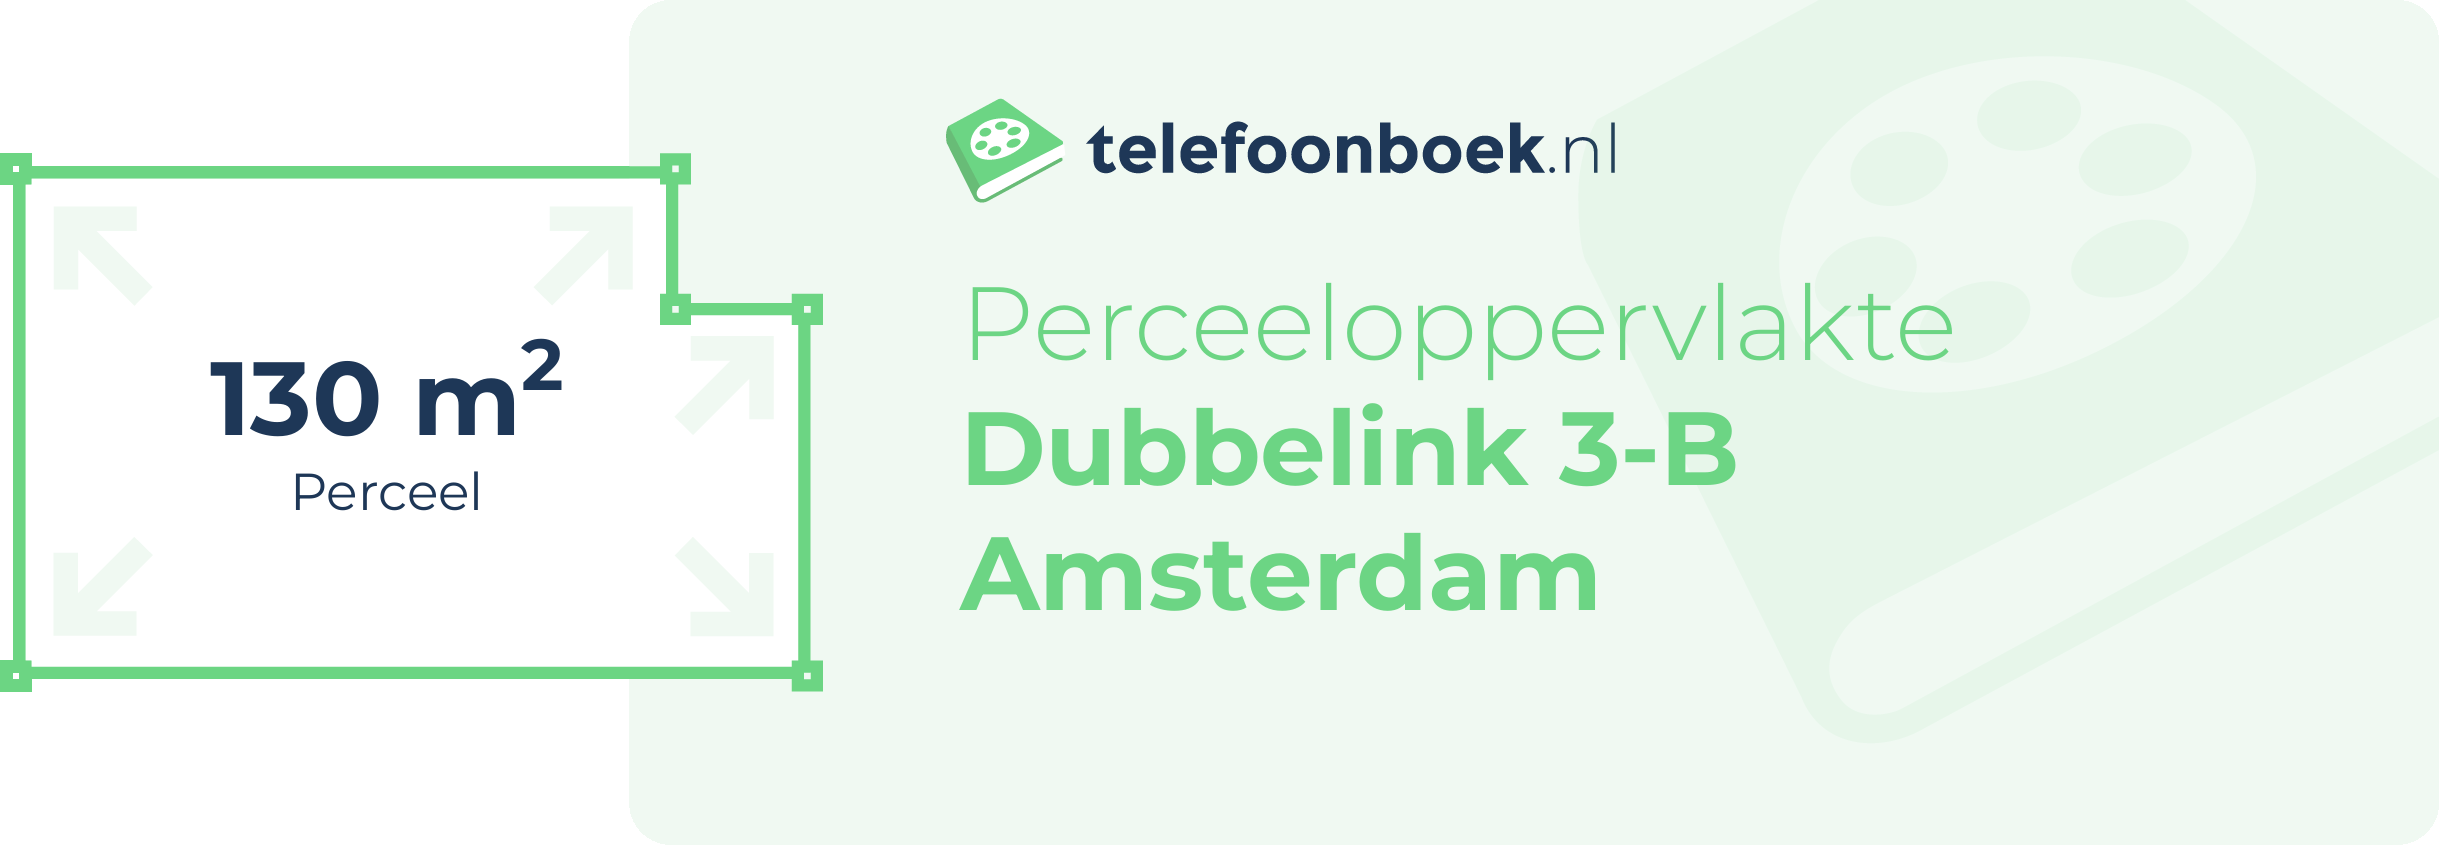 Perceeloppervlakte Dubbelink 3-B Amsterdam